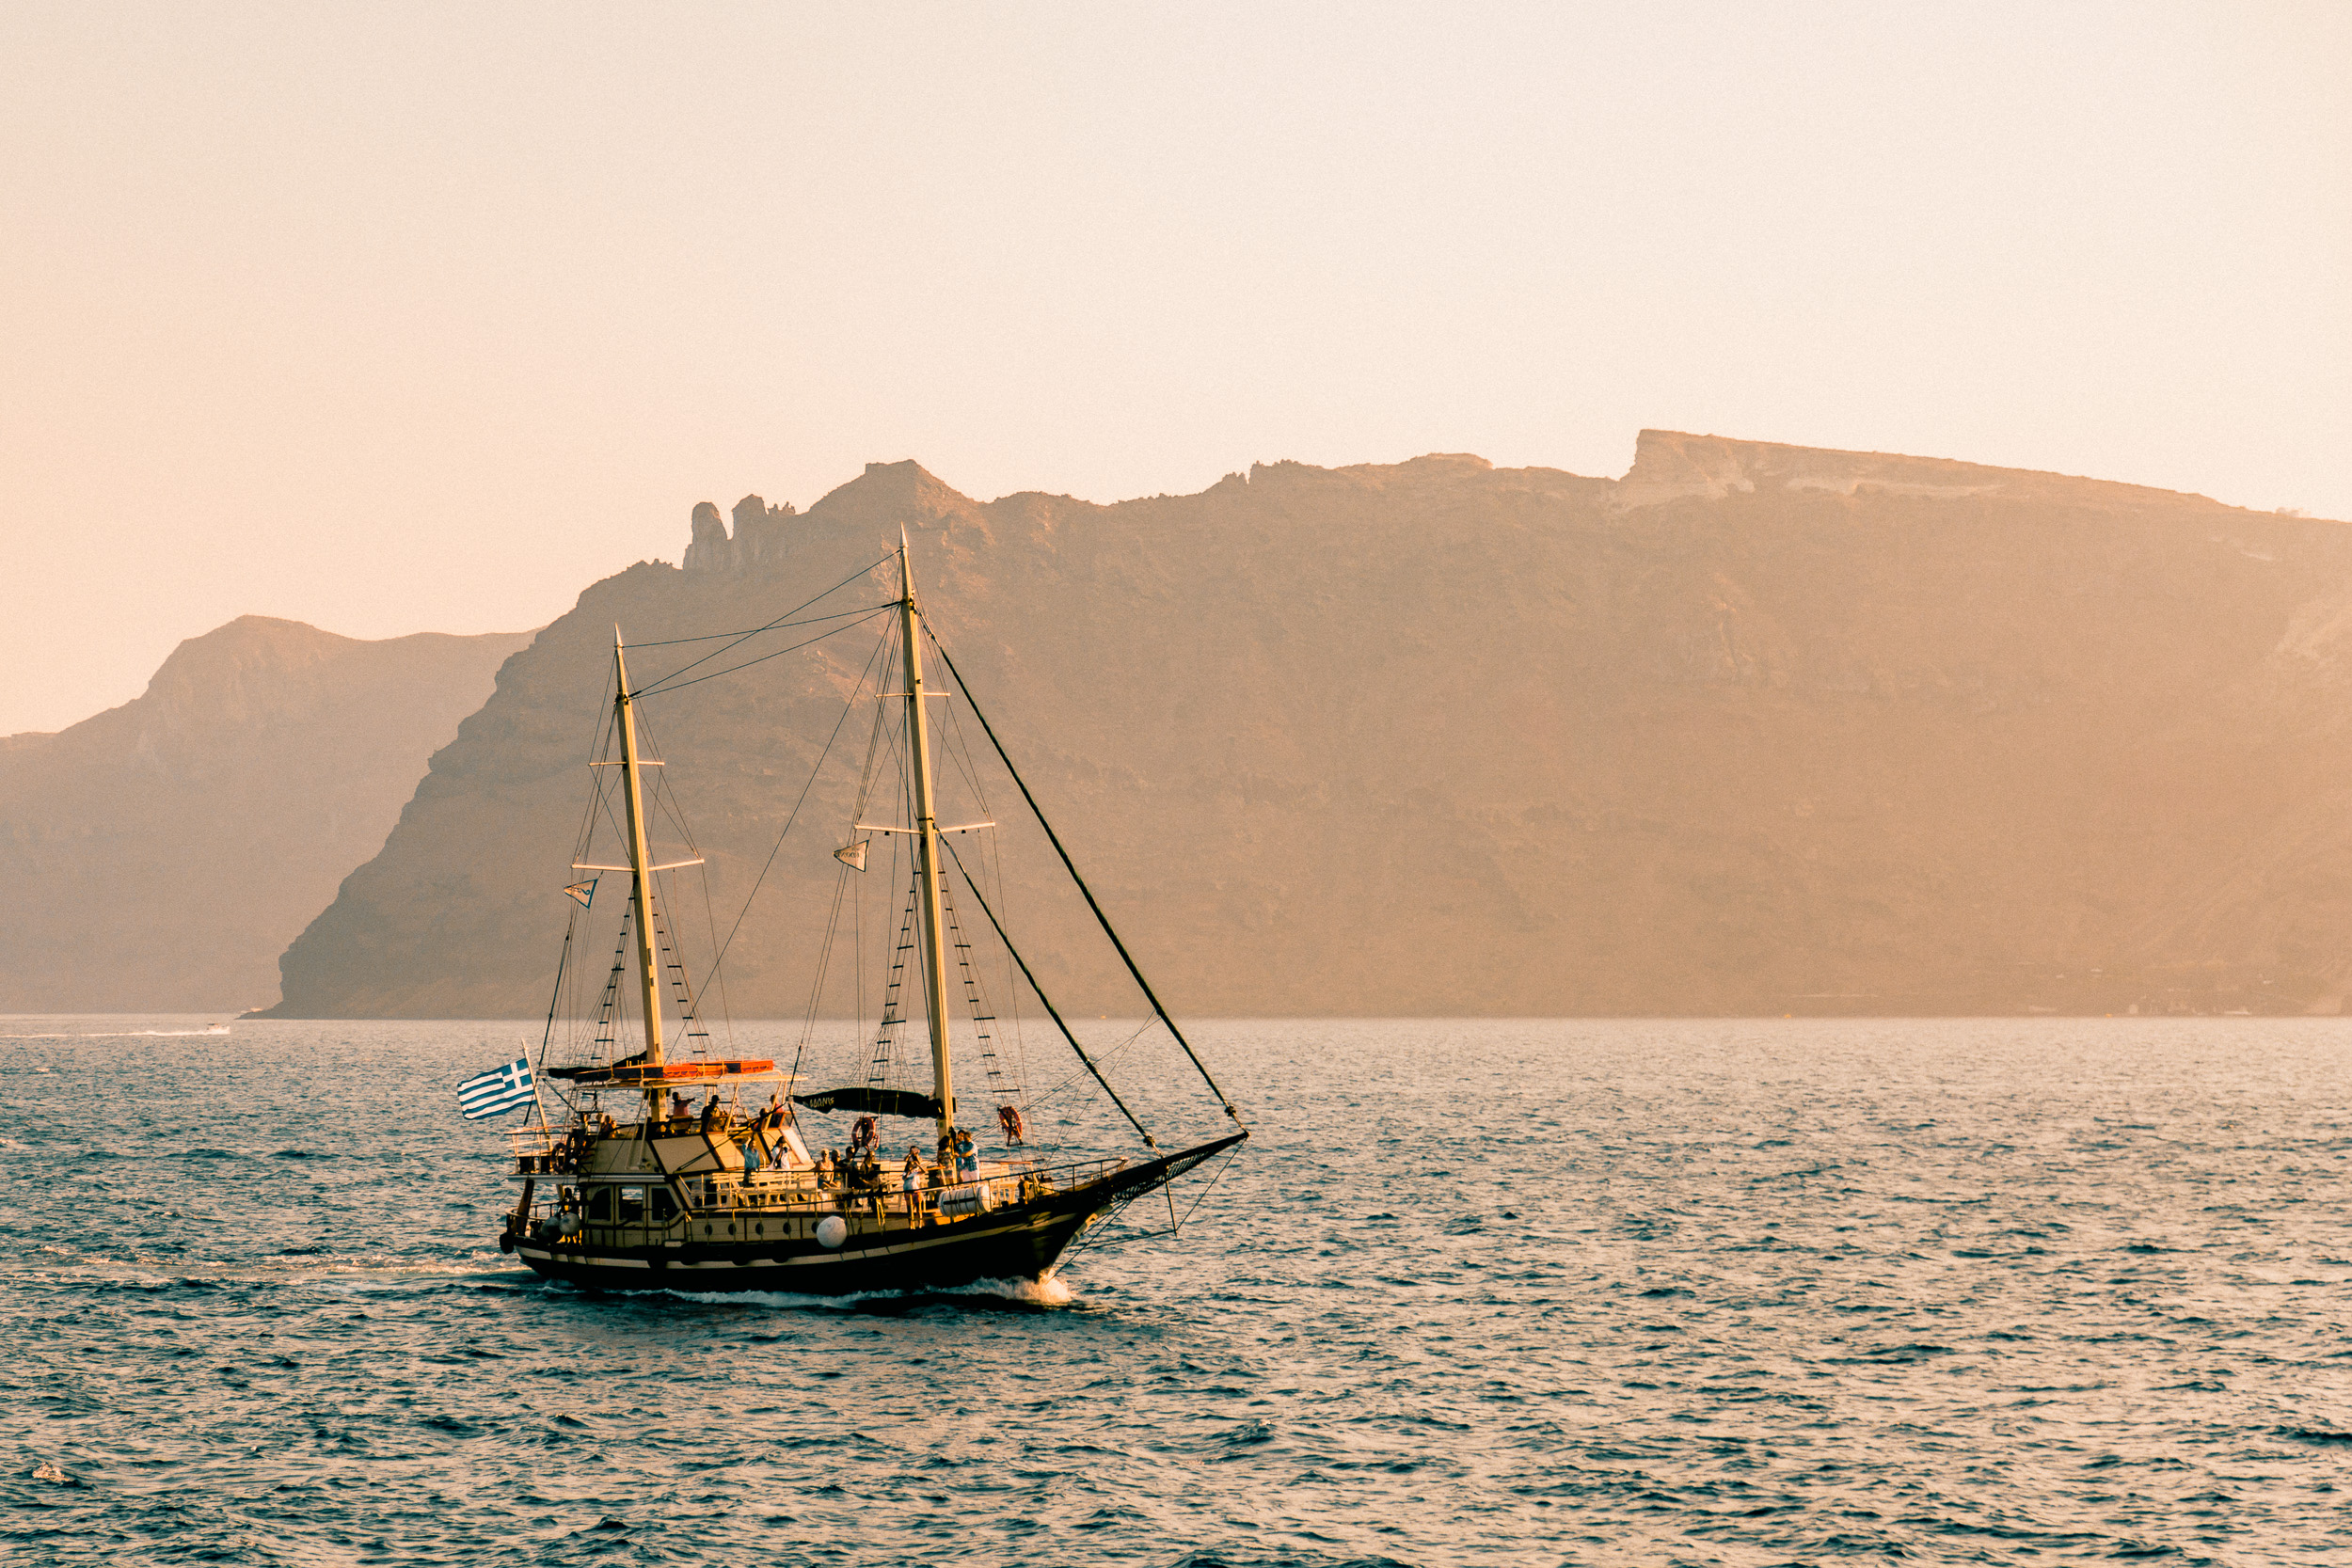 33-santorini-greece-sunset-sailboat-cyclades-aegean-sea-anna-elina-lahti-photographer.jpg